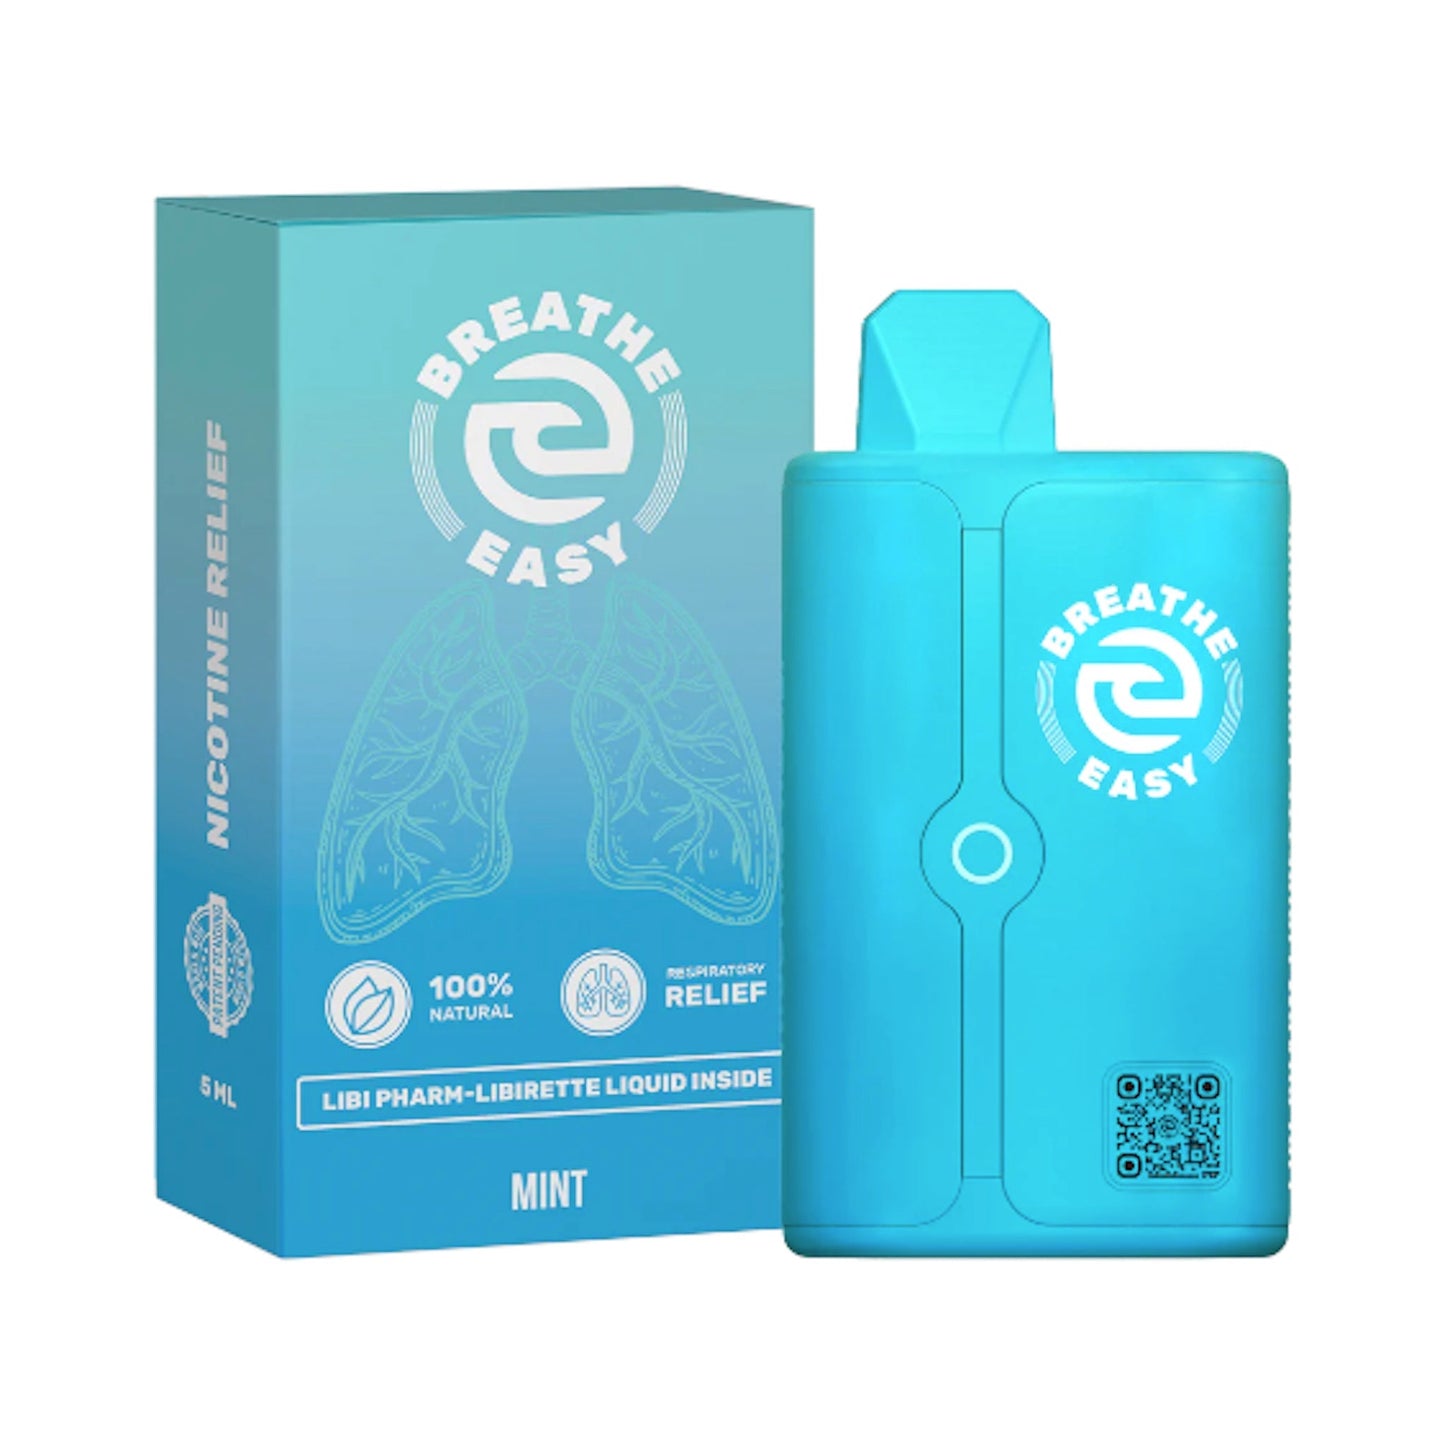 Breathe Easy 0% Vaporizer Mint